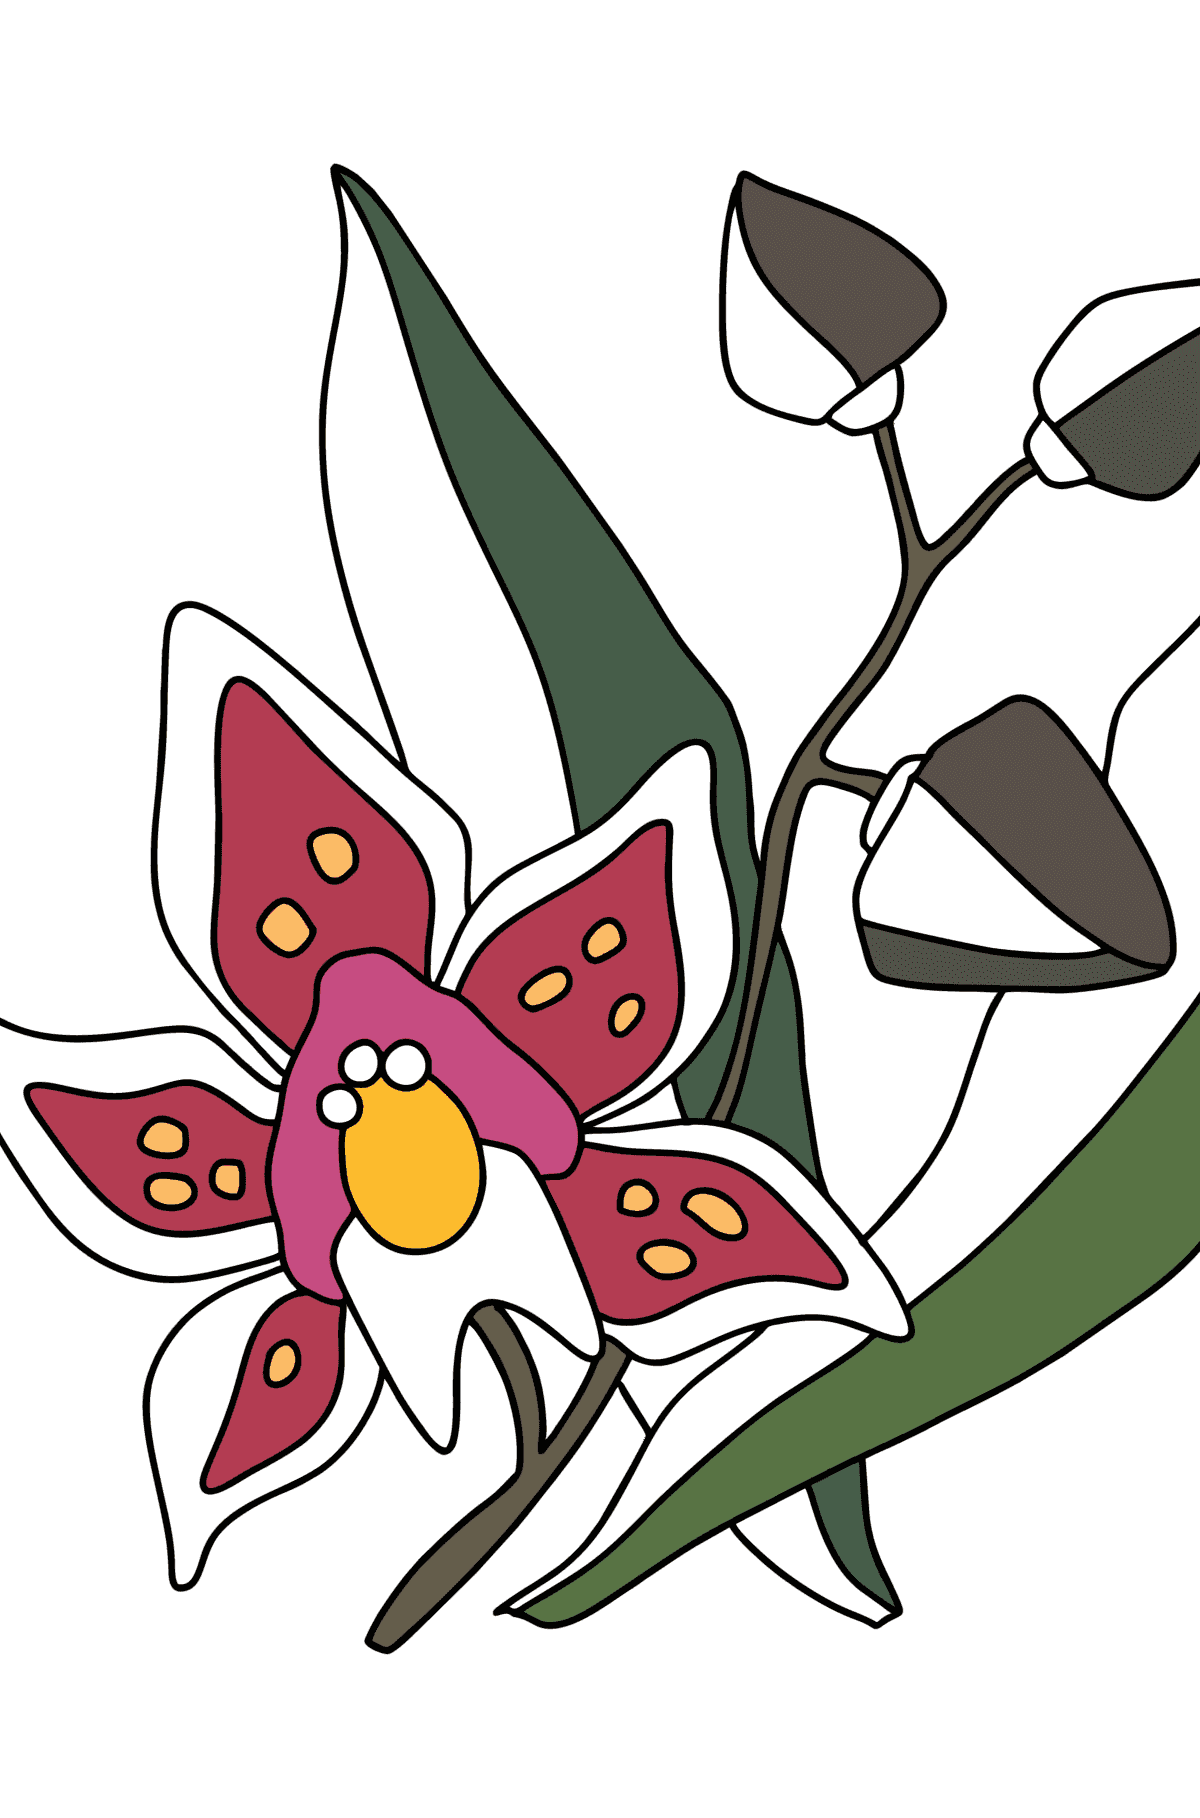 Tegning til fargelegging Orkidé - Tegninger til fargelegging for barn